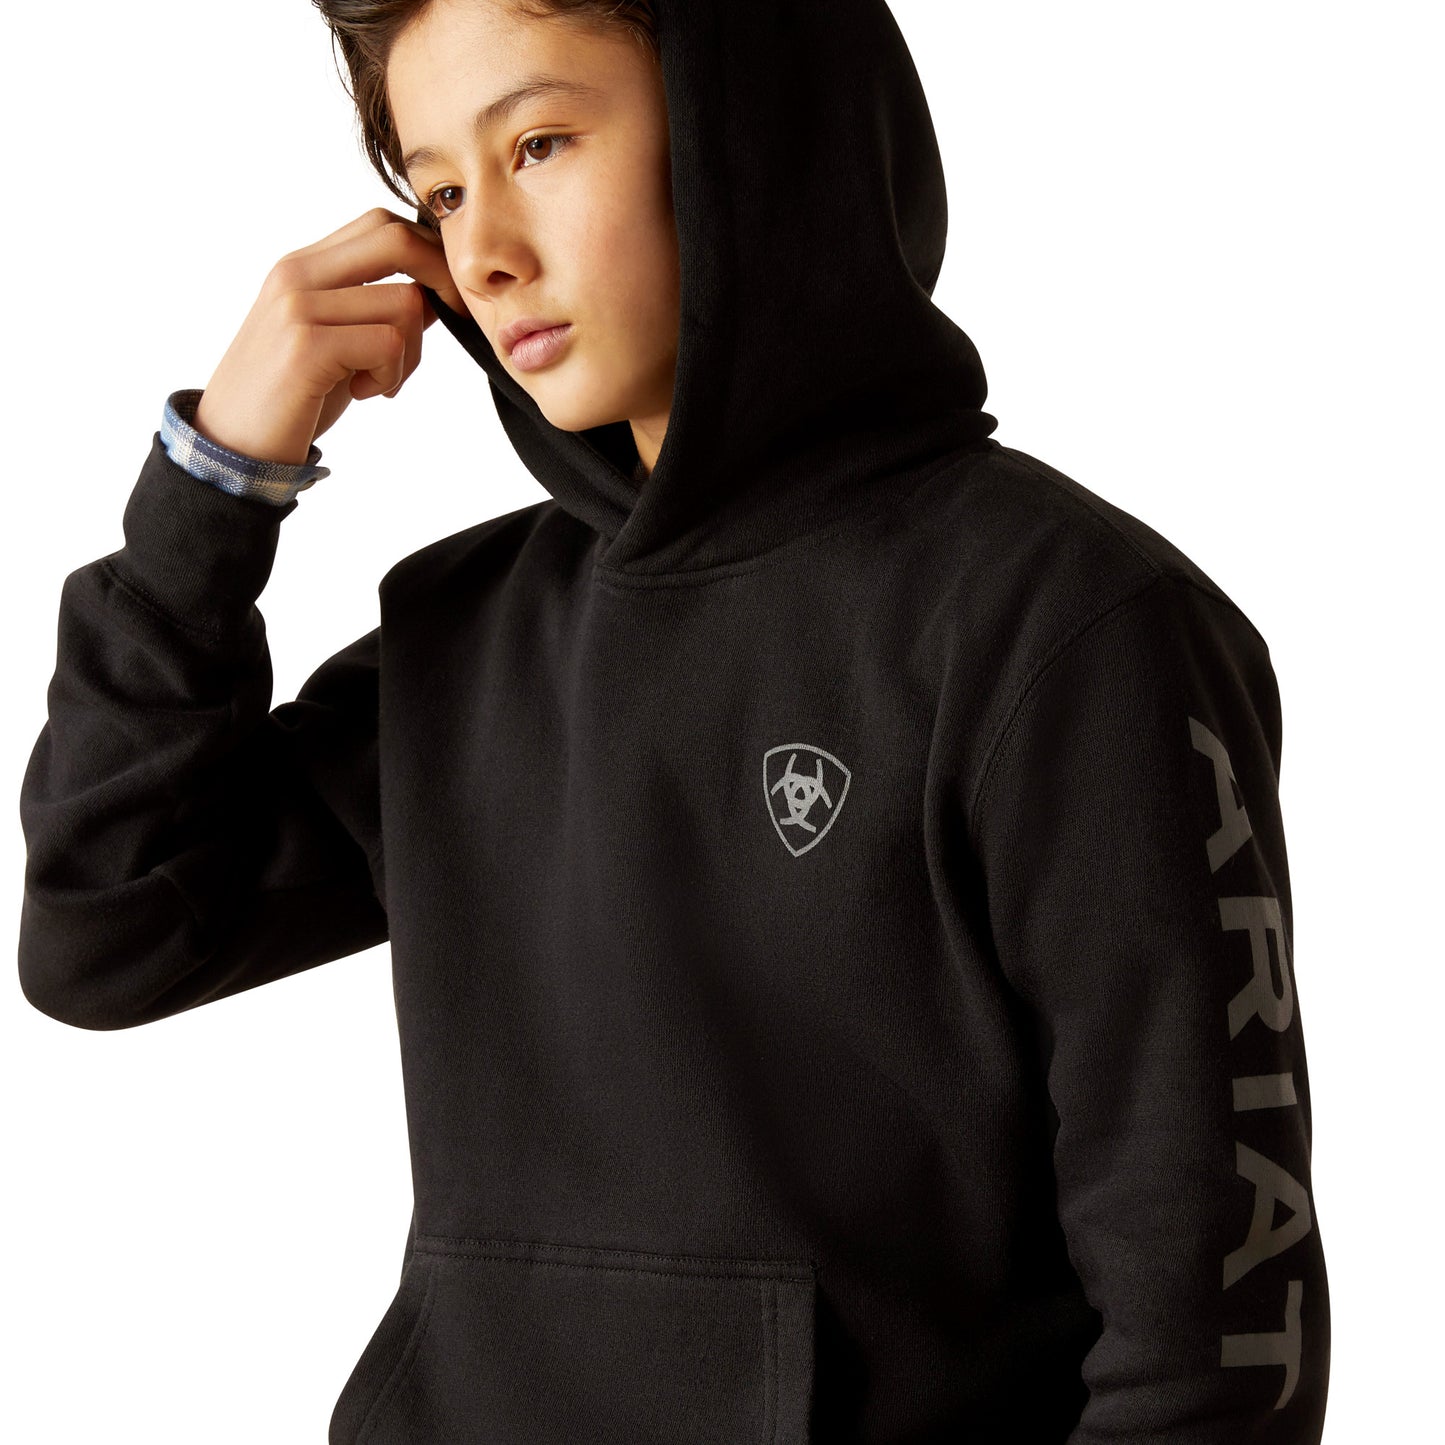 Ariat Youth Boy's Logo Black Hooded Sweatshirt 10046473